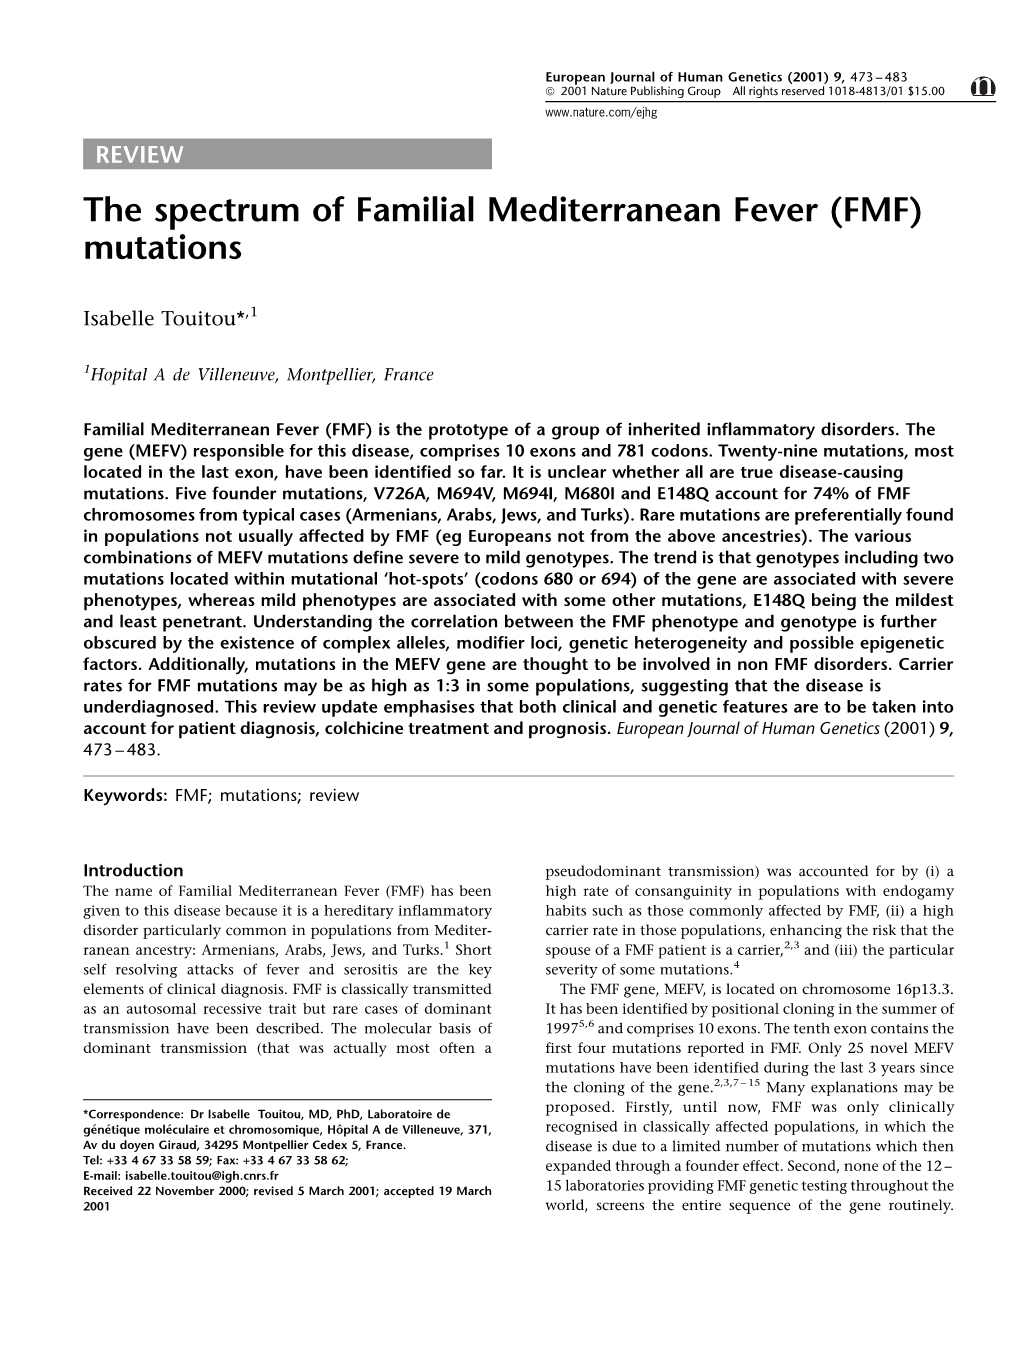 The Spectrum of Familial Mediterranean Fever (FMF) Mutations